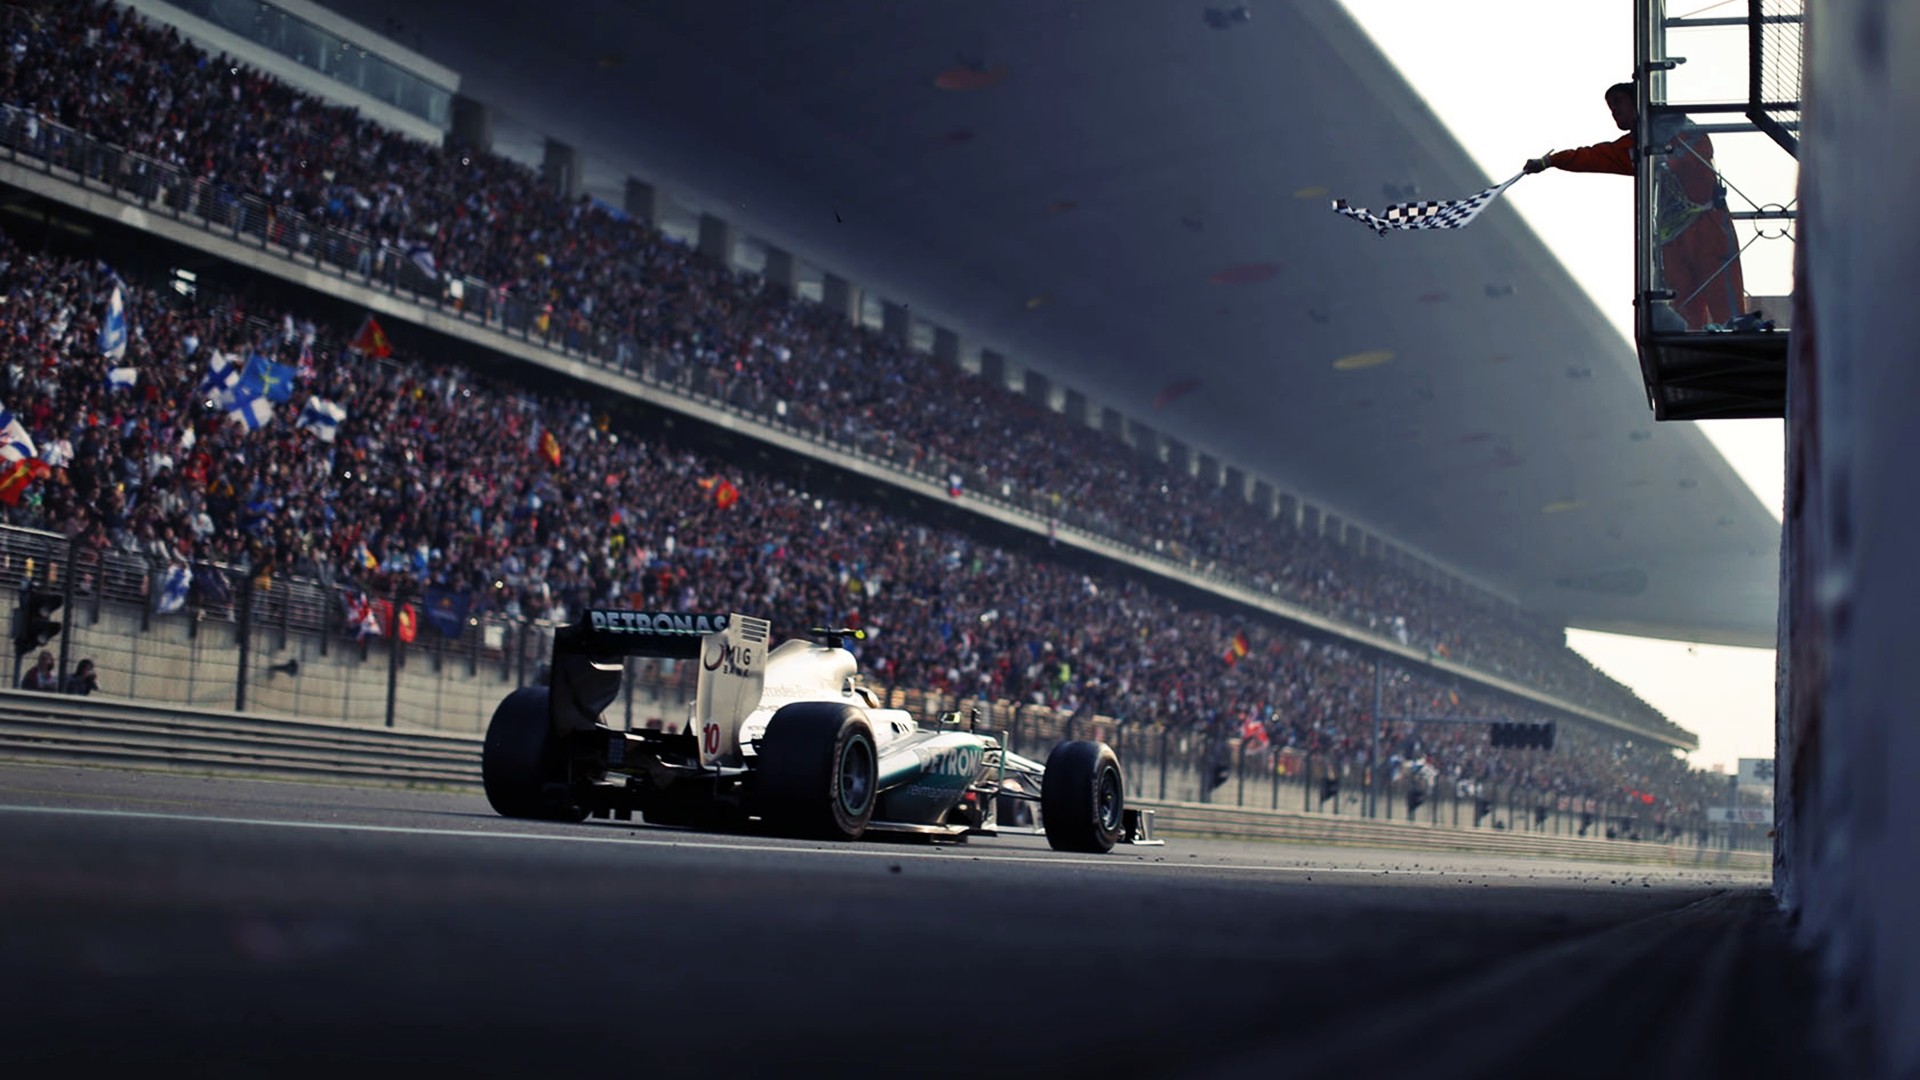 One Lewis Hamilton Mercedes Petronas Amg Chinese HD Wallpaper